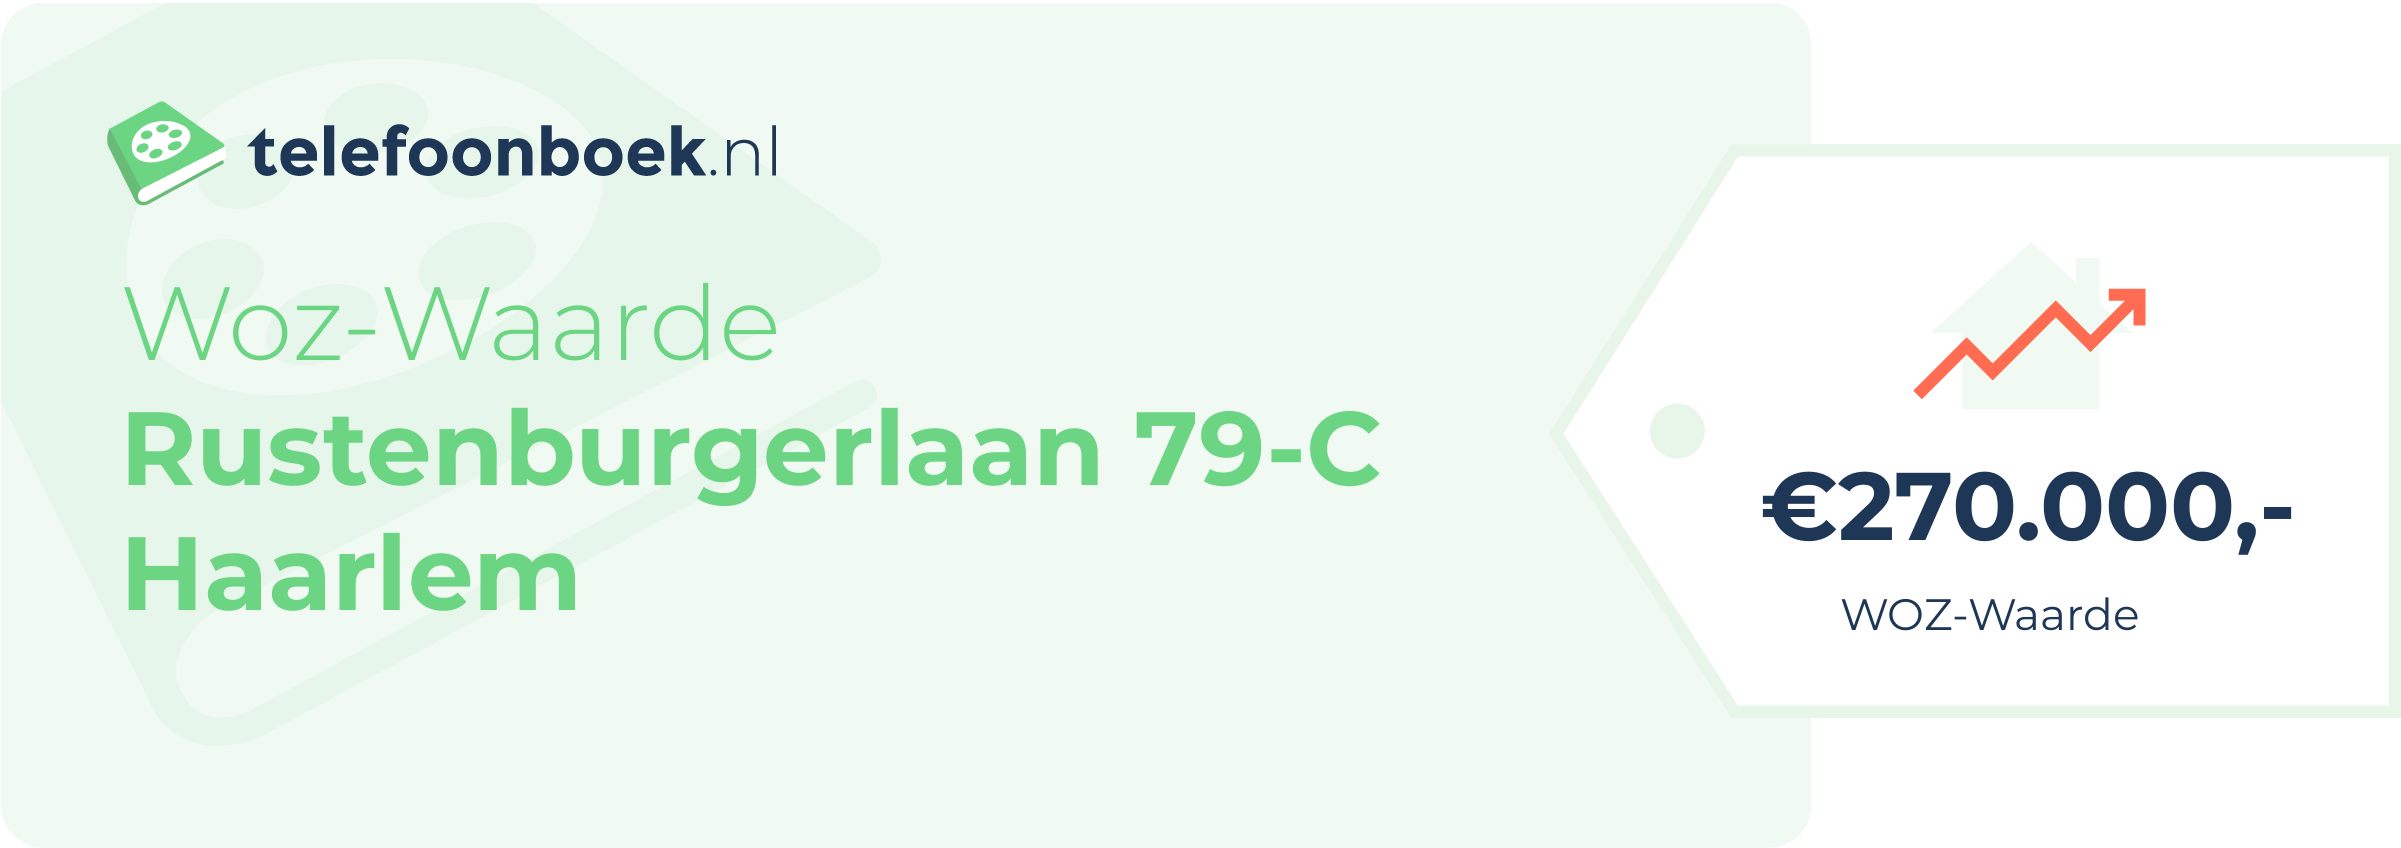 WOZ-waarde Rustenburgerlaan 79-C Haarlem